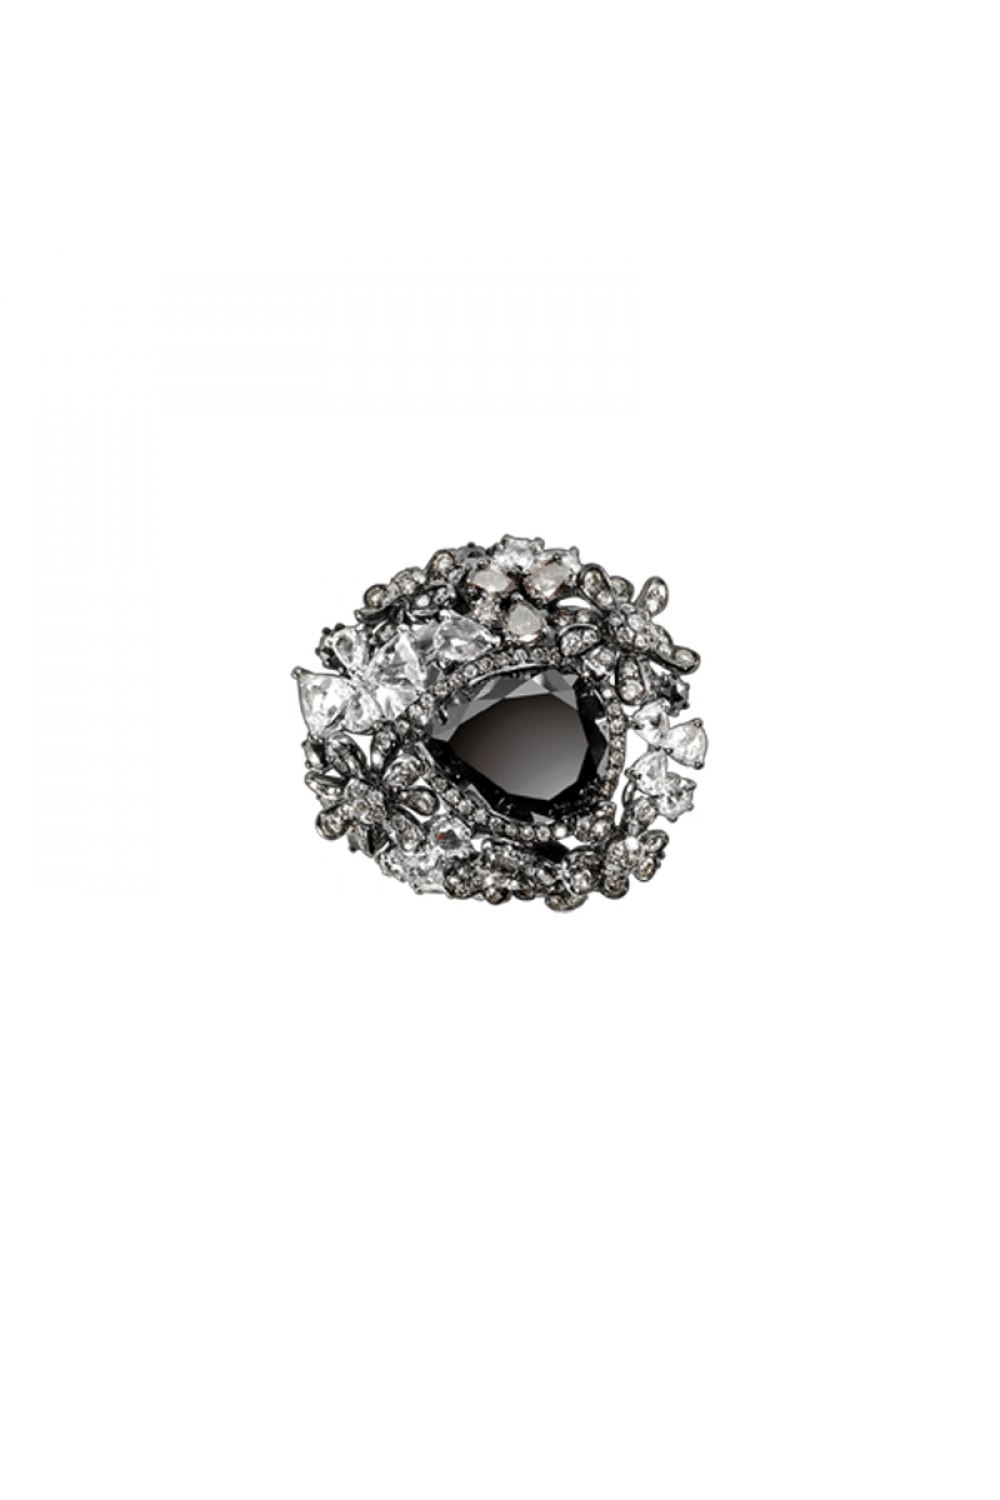 Floral Black Diamond Ring